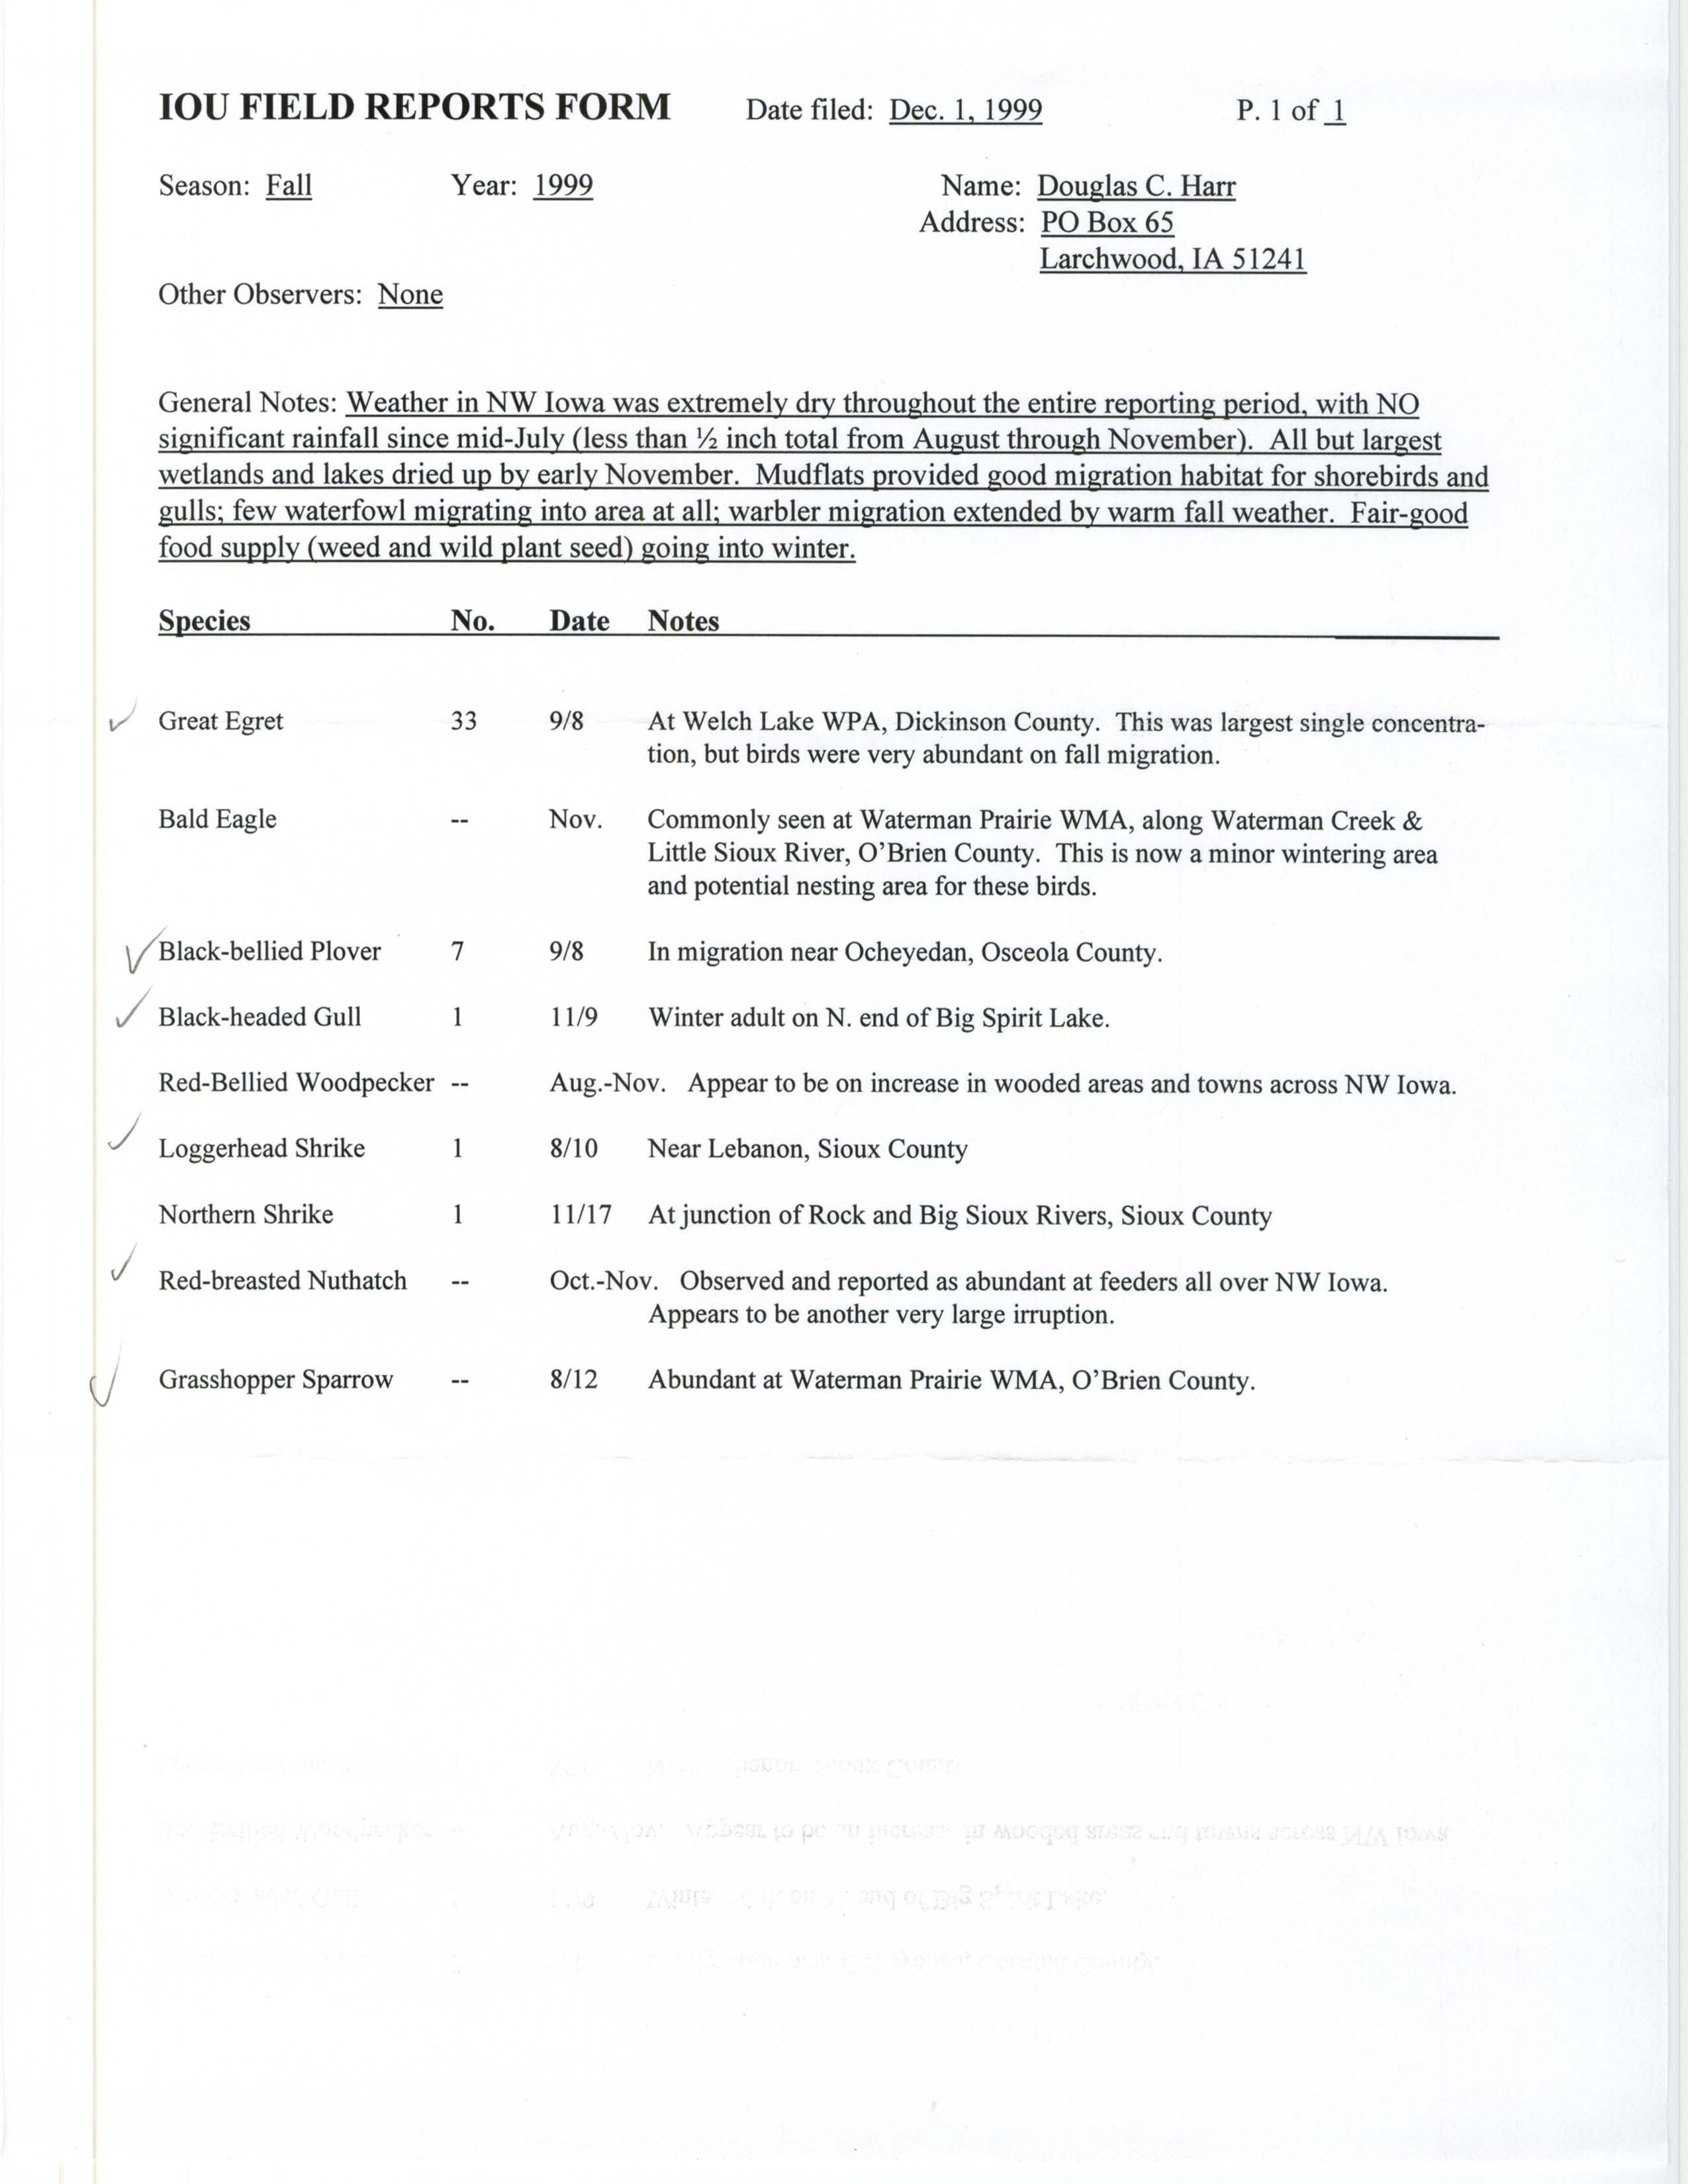 IOU field reports form, fall 1999, Douglas Harr